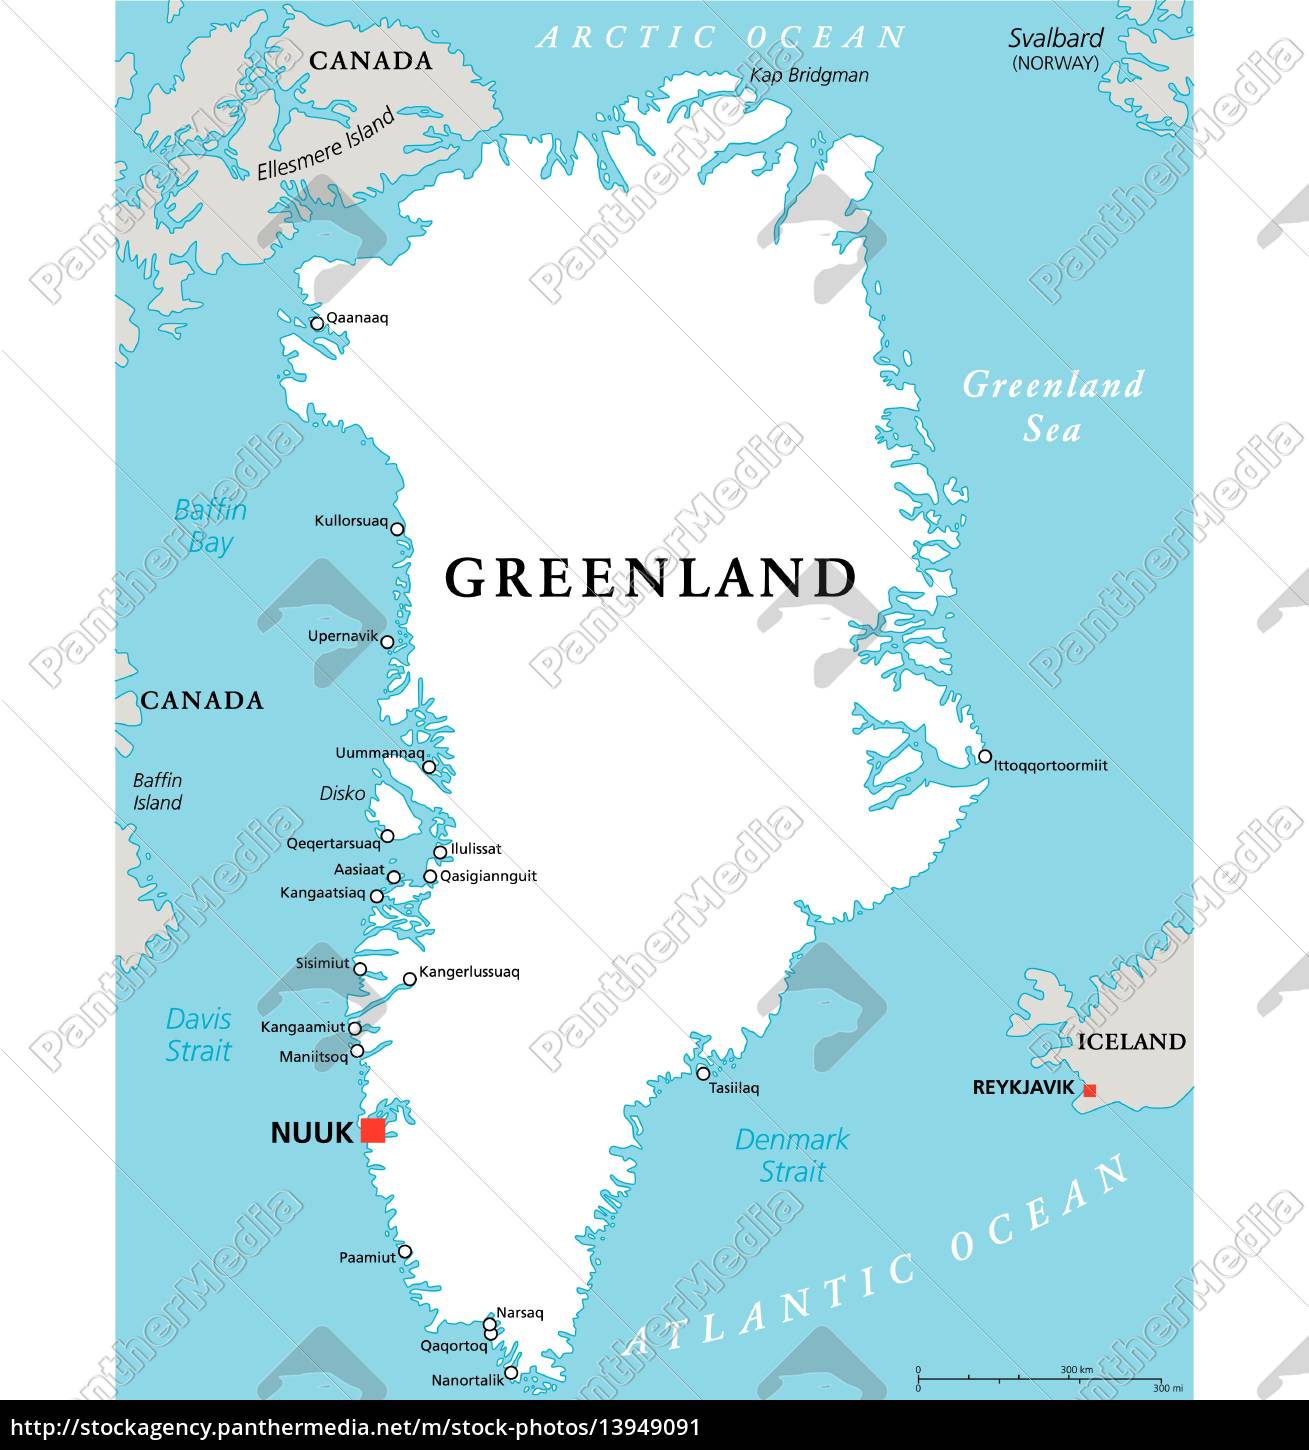 grönland political map - Stockfoto - #13949091 | Bildagentur PantherMedia